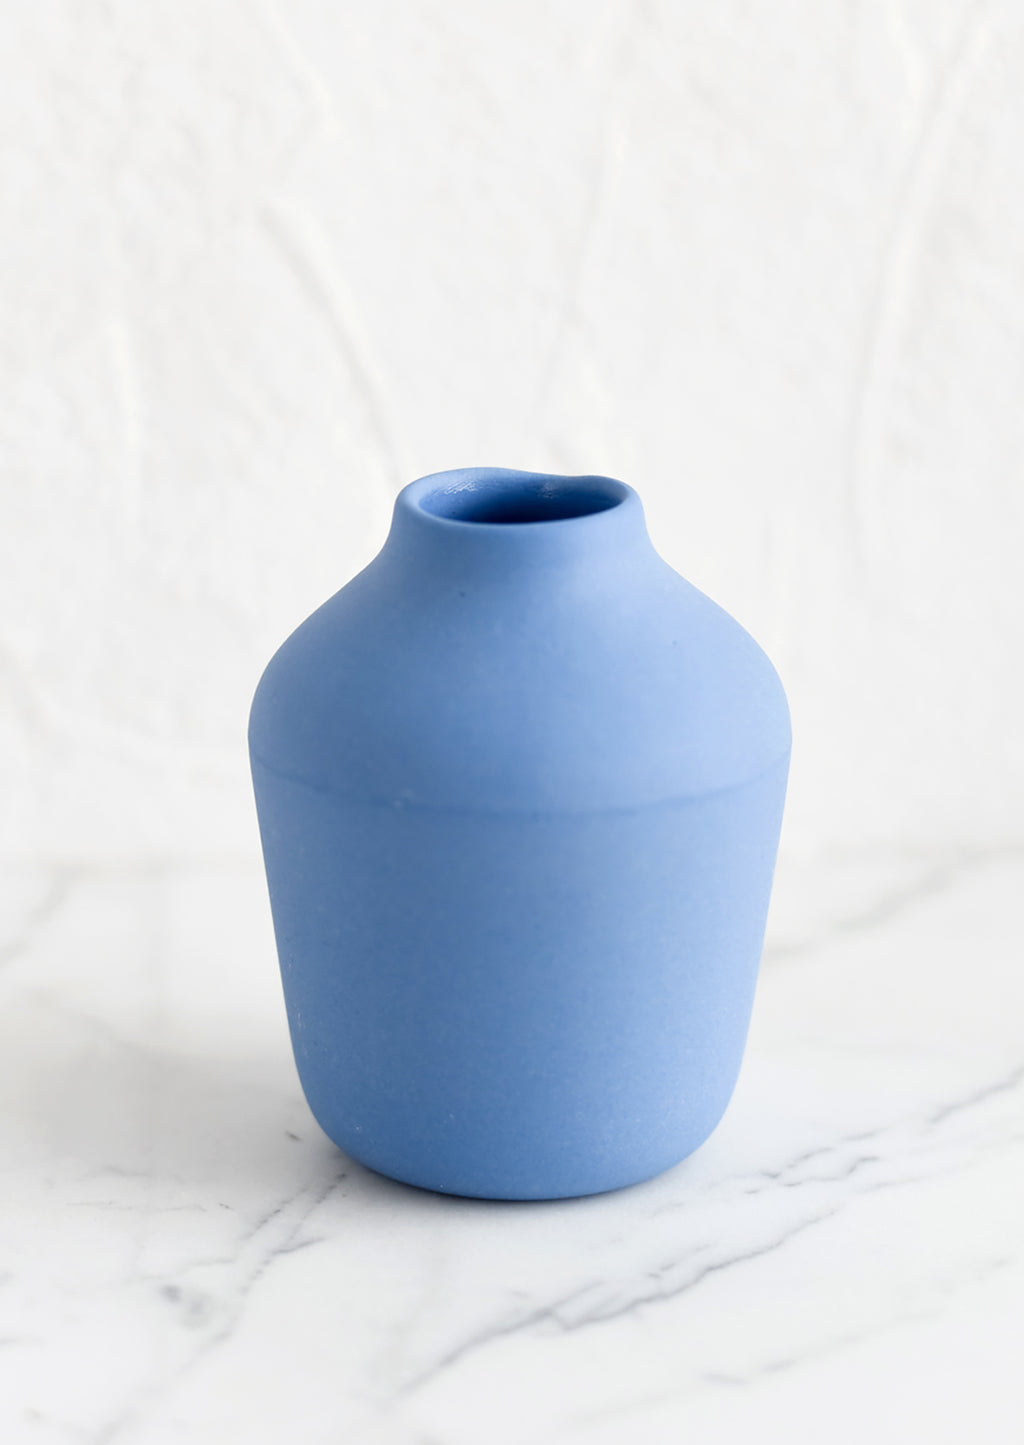 Cornflower: A cornflower colored porcelain bud vase.